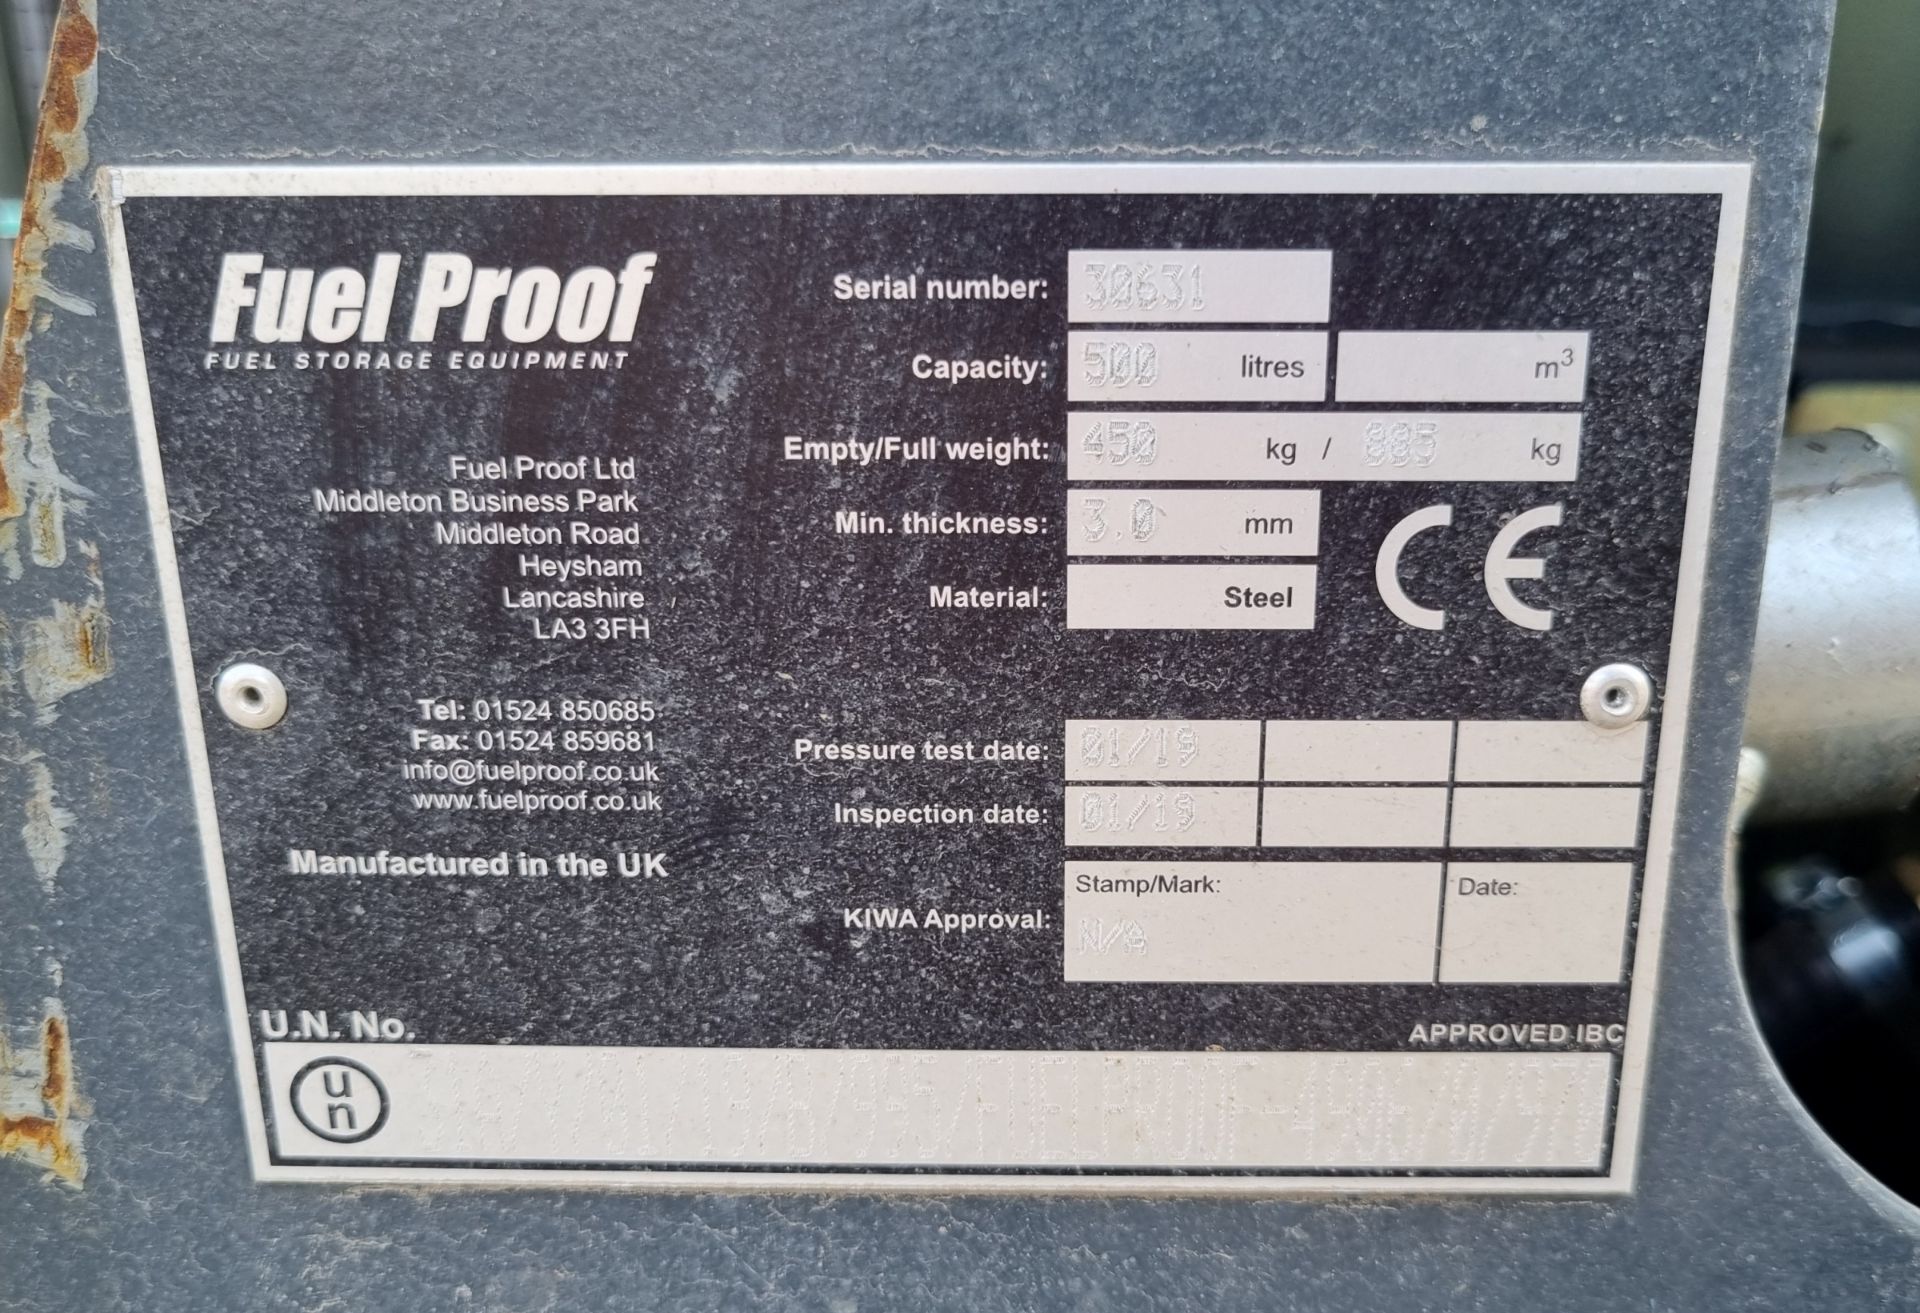 Fuel Proof 500 litre diesel tank - Serial No. 30631 - L 1350 x W 1100 x H 1300mm - Image 8 of 8